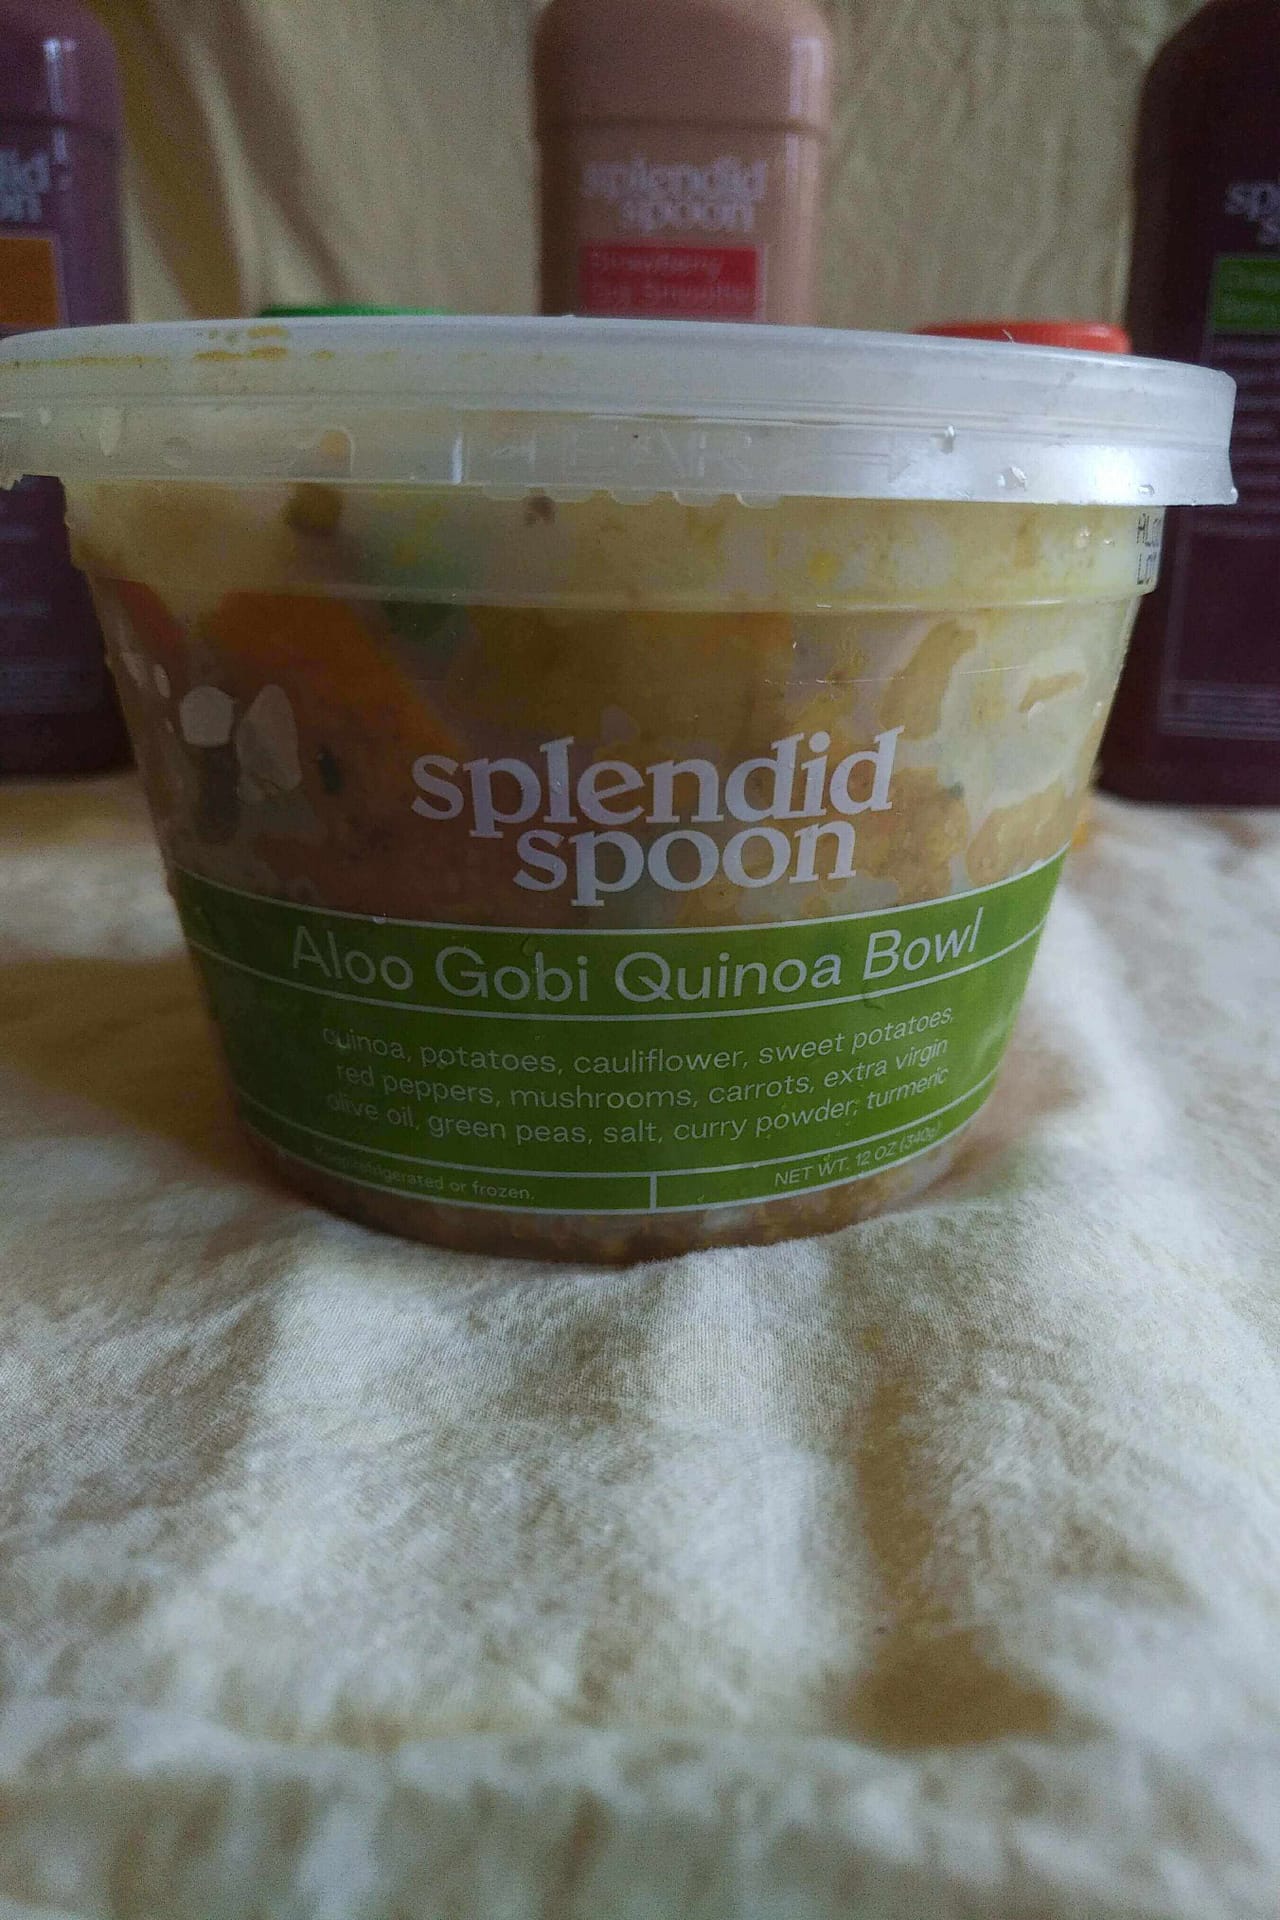 Splendid Spoon Aloo Gobi Quinoa Bowl Image